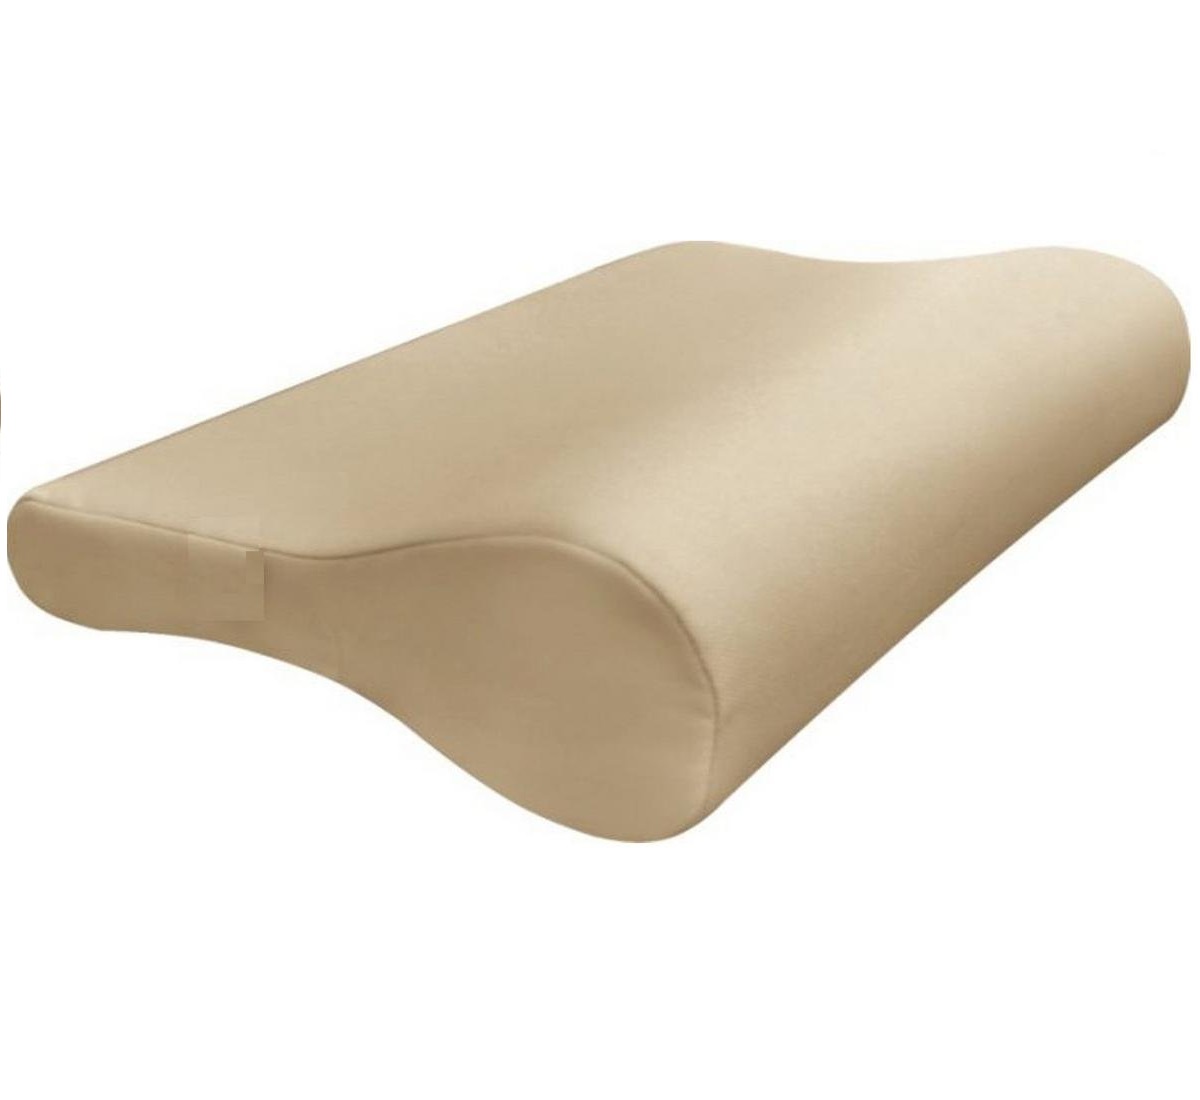 GHK S10 Cervical Pillow Universal Regular for Neck & Back Pain Support (Skin Colour)